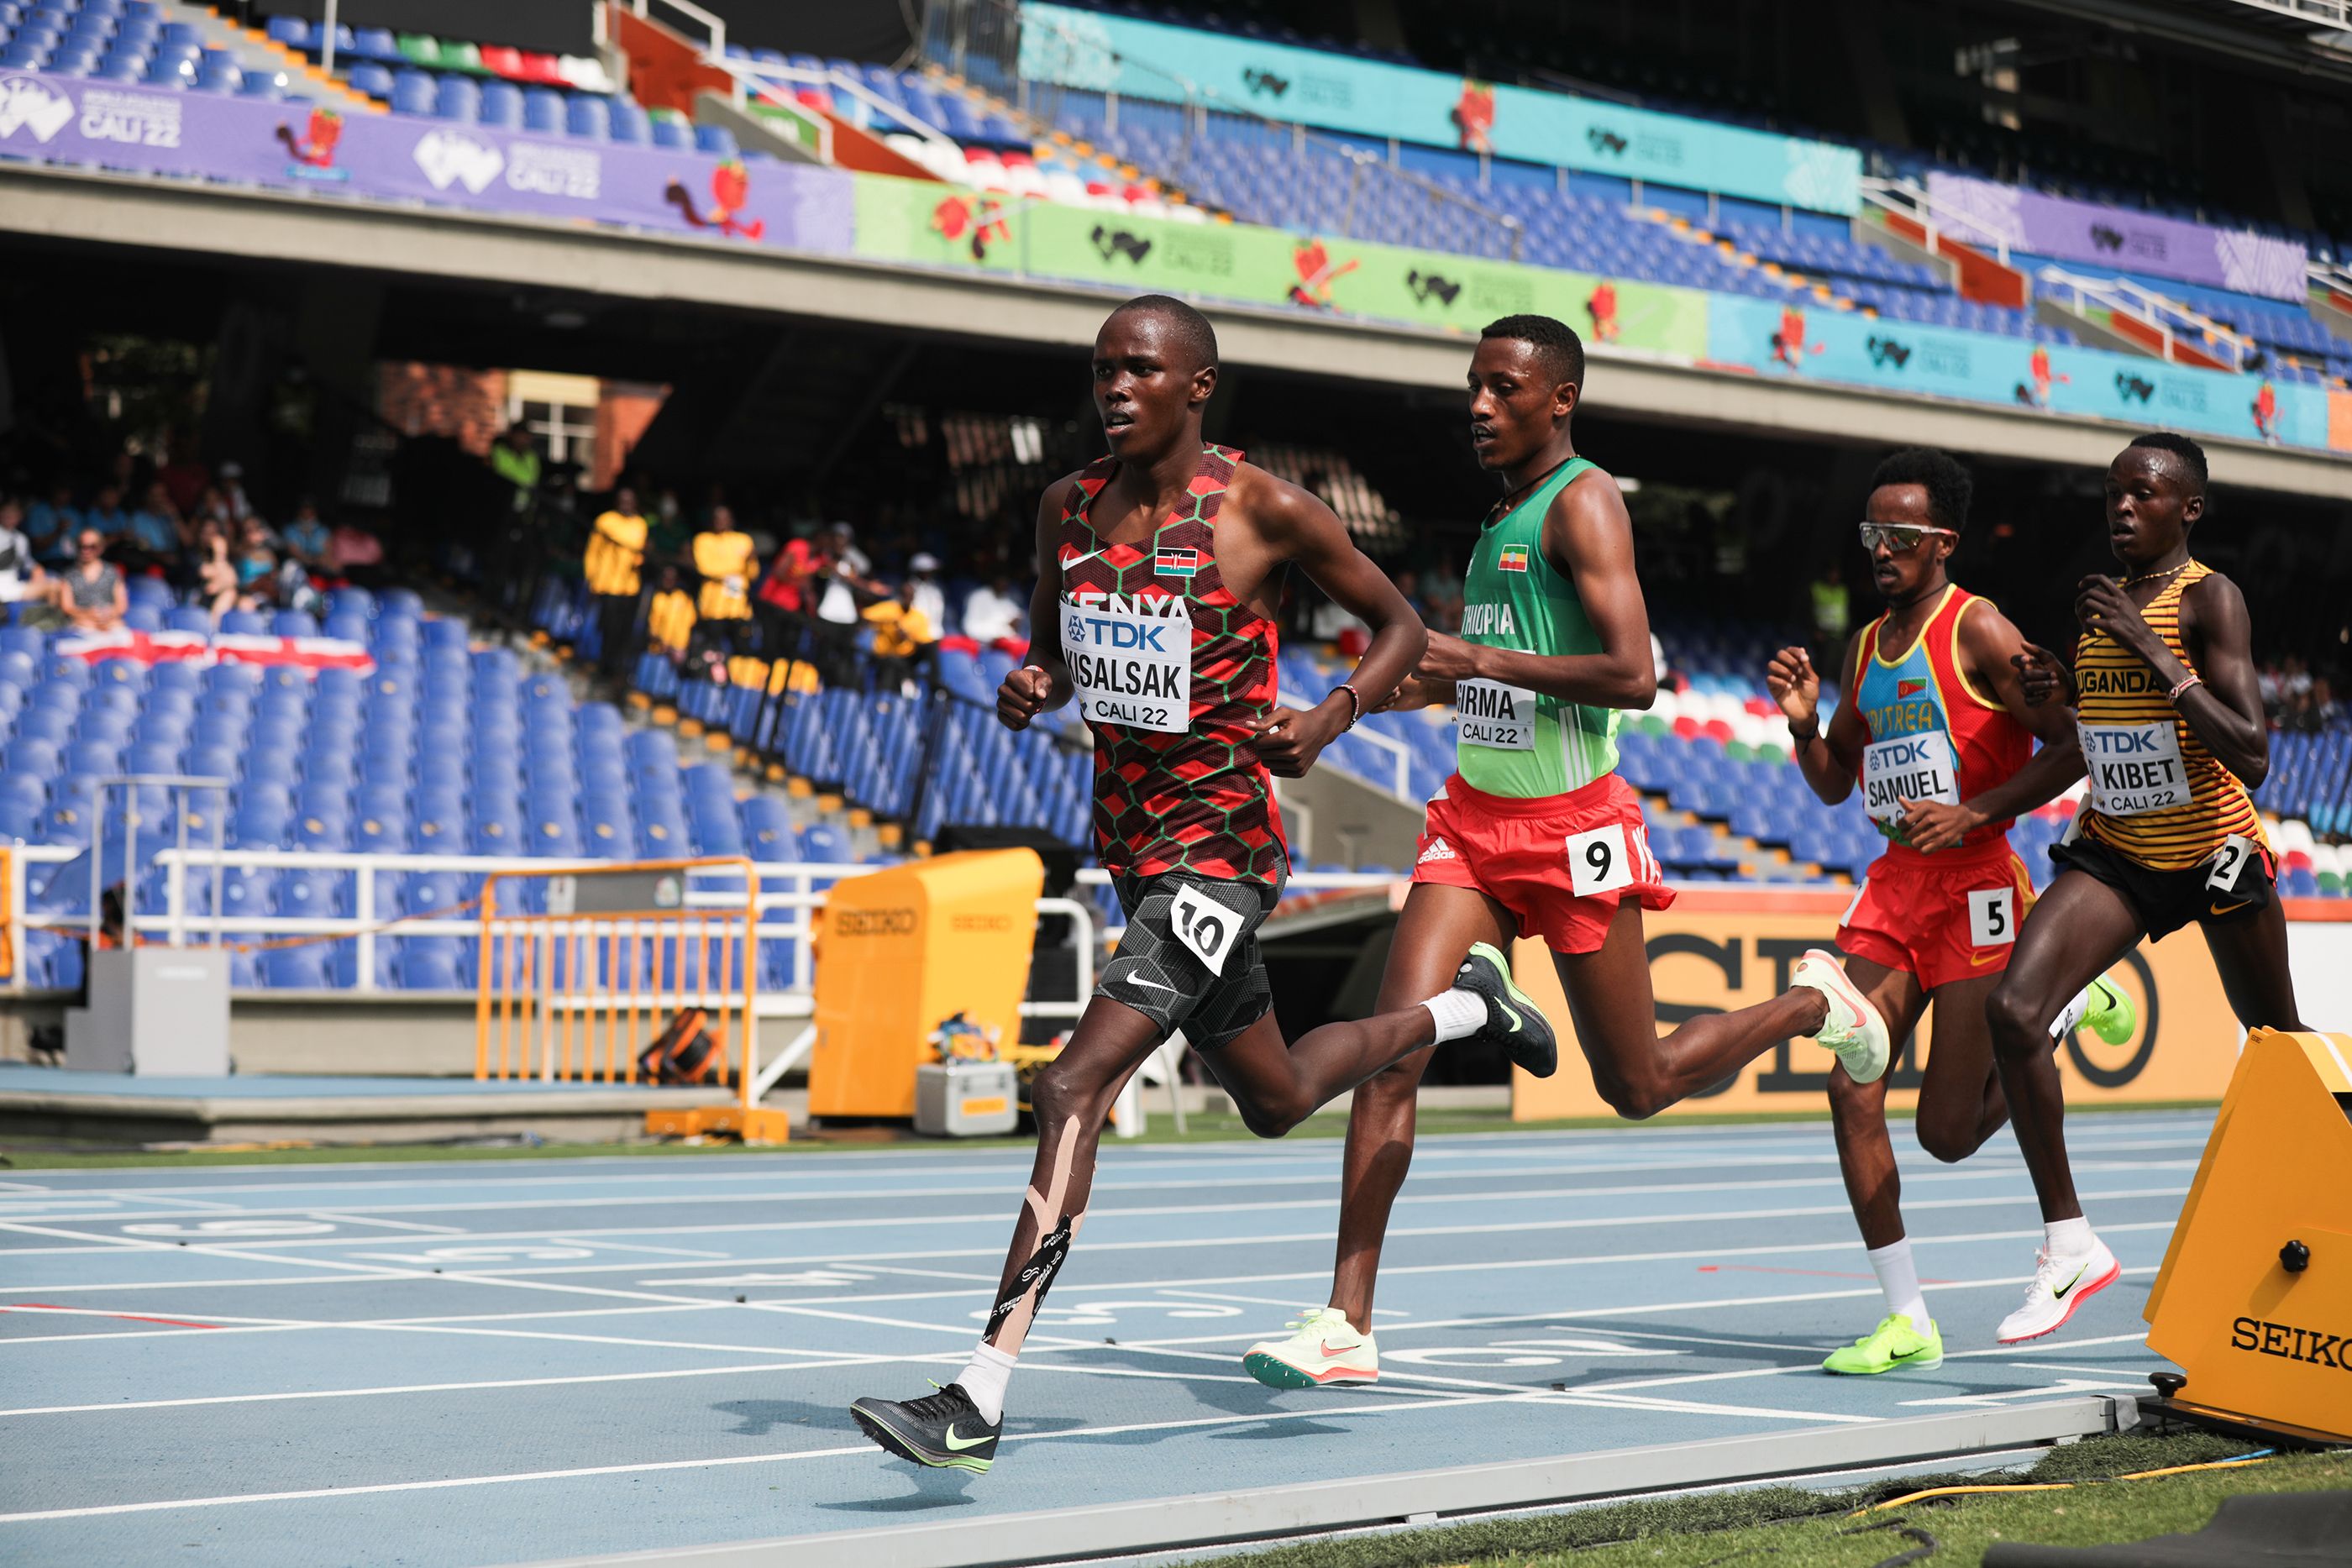 Edwin Kimosong Kisalsak wins his 3000m heat at the World Athletics U20 Championships Cali 22